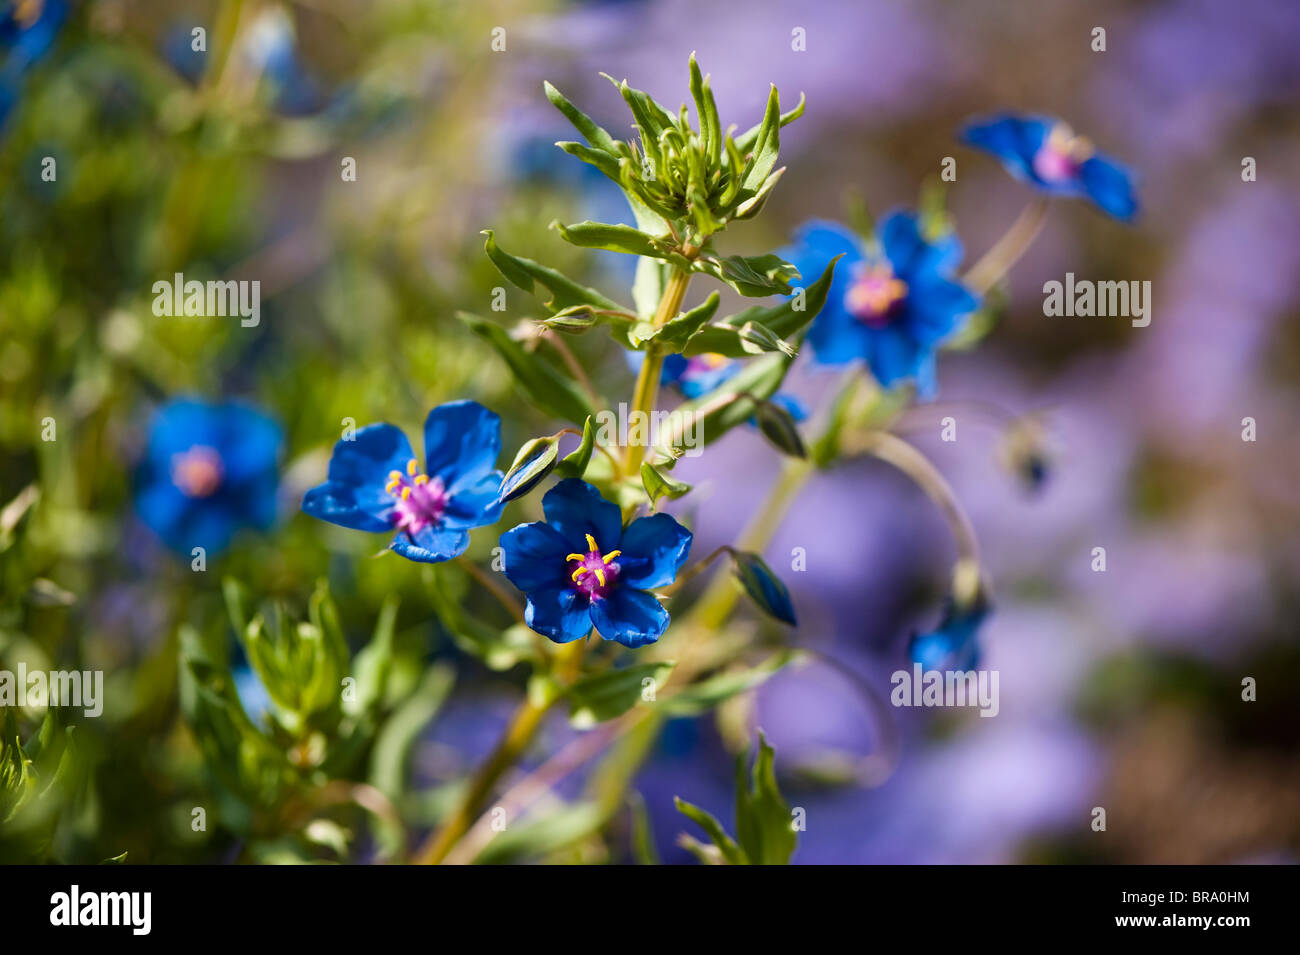 Blue Pimpernel, Anagallis arvensis var. caerulea, in flower Stock Photo